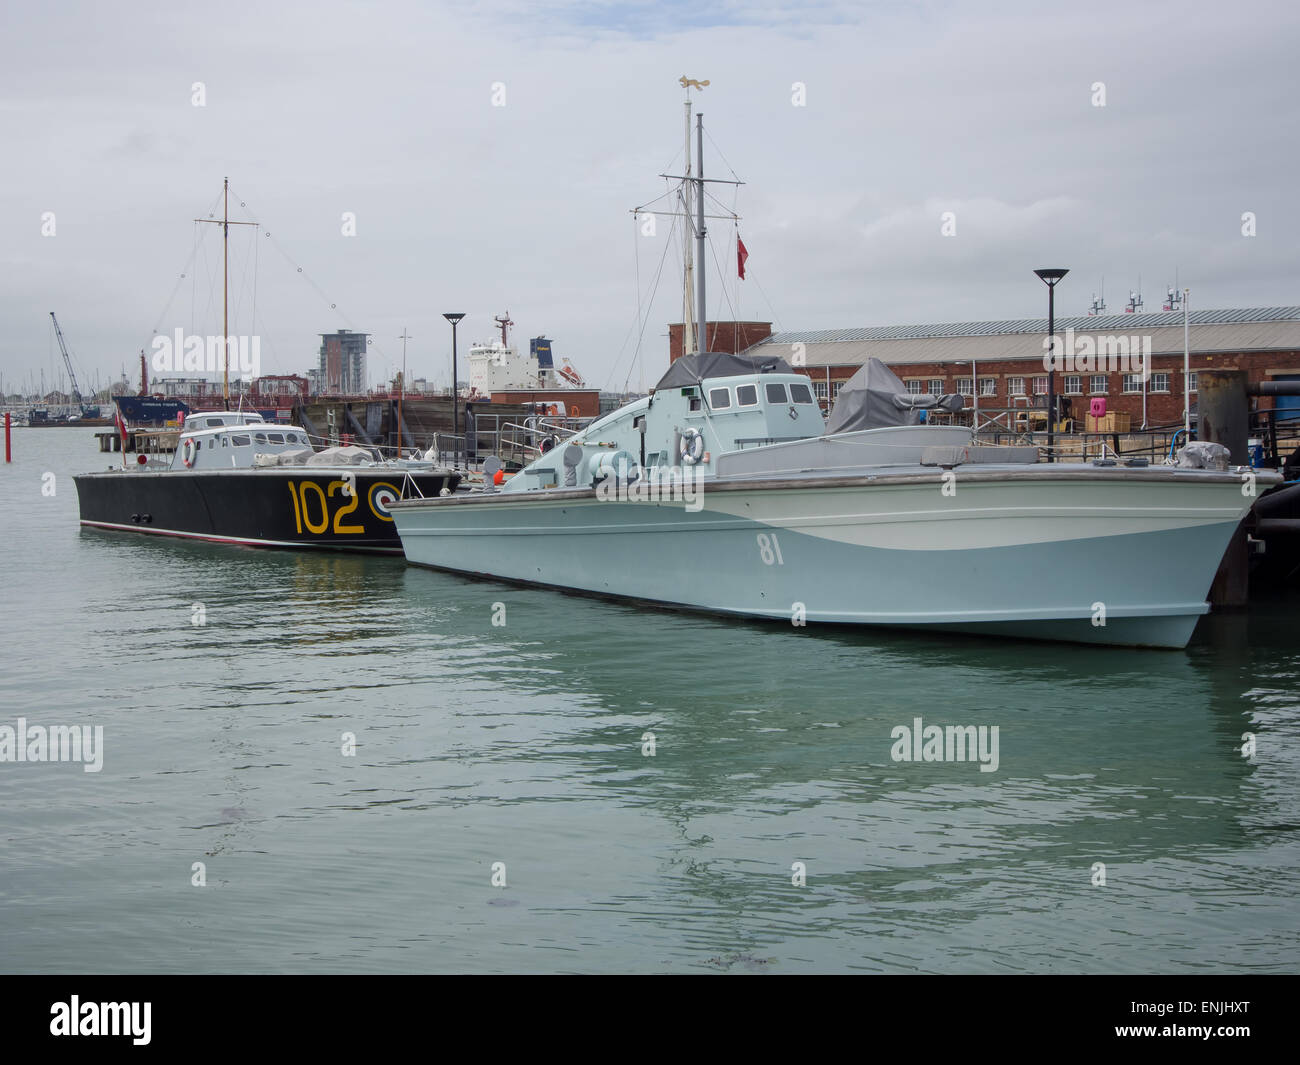 motor torpedo boat 102 and  Motor Gun Boat 81 at Portsmouth Historic Dockyard, England Stock Photo